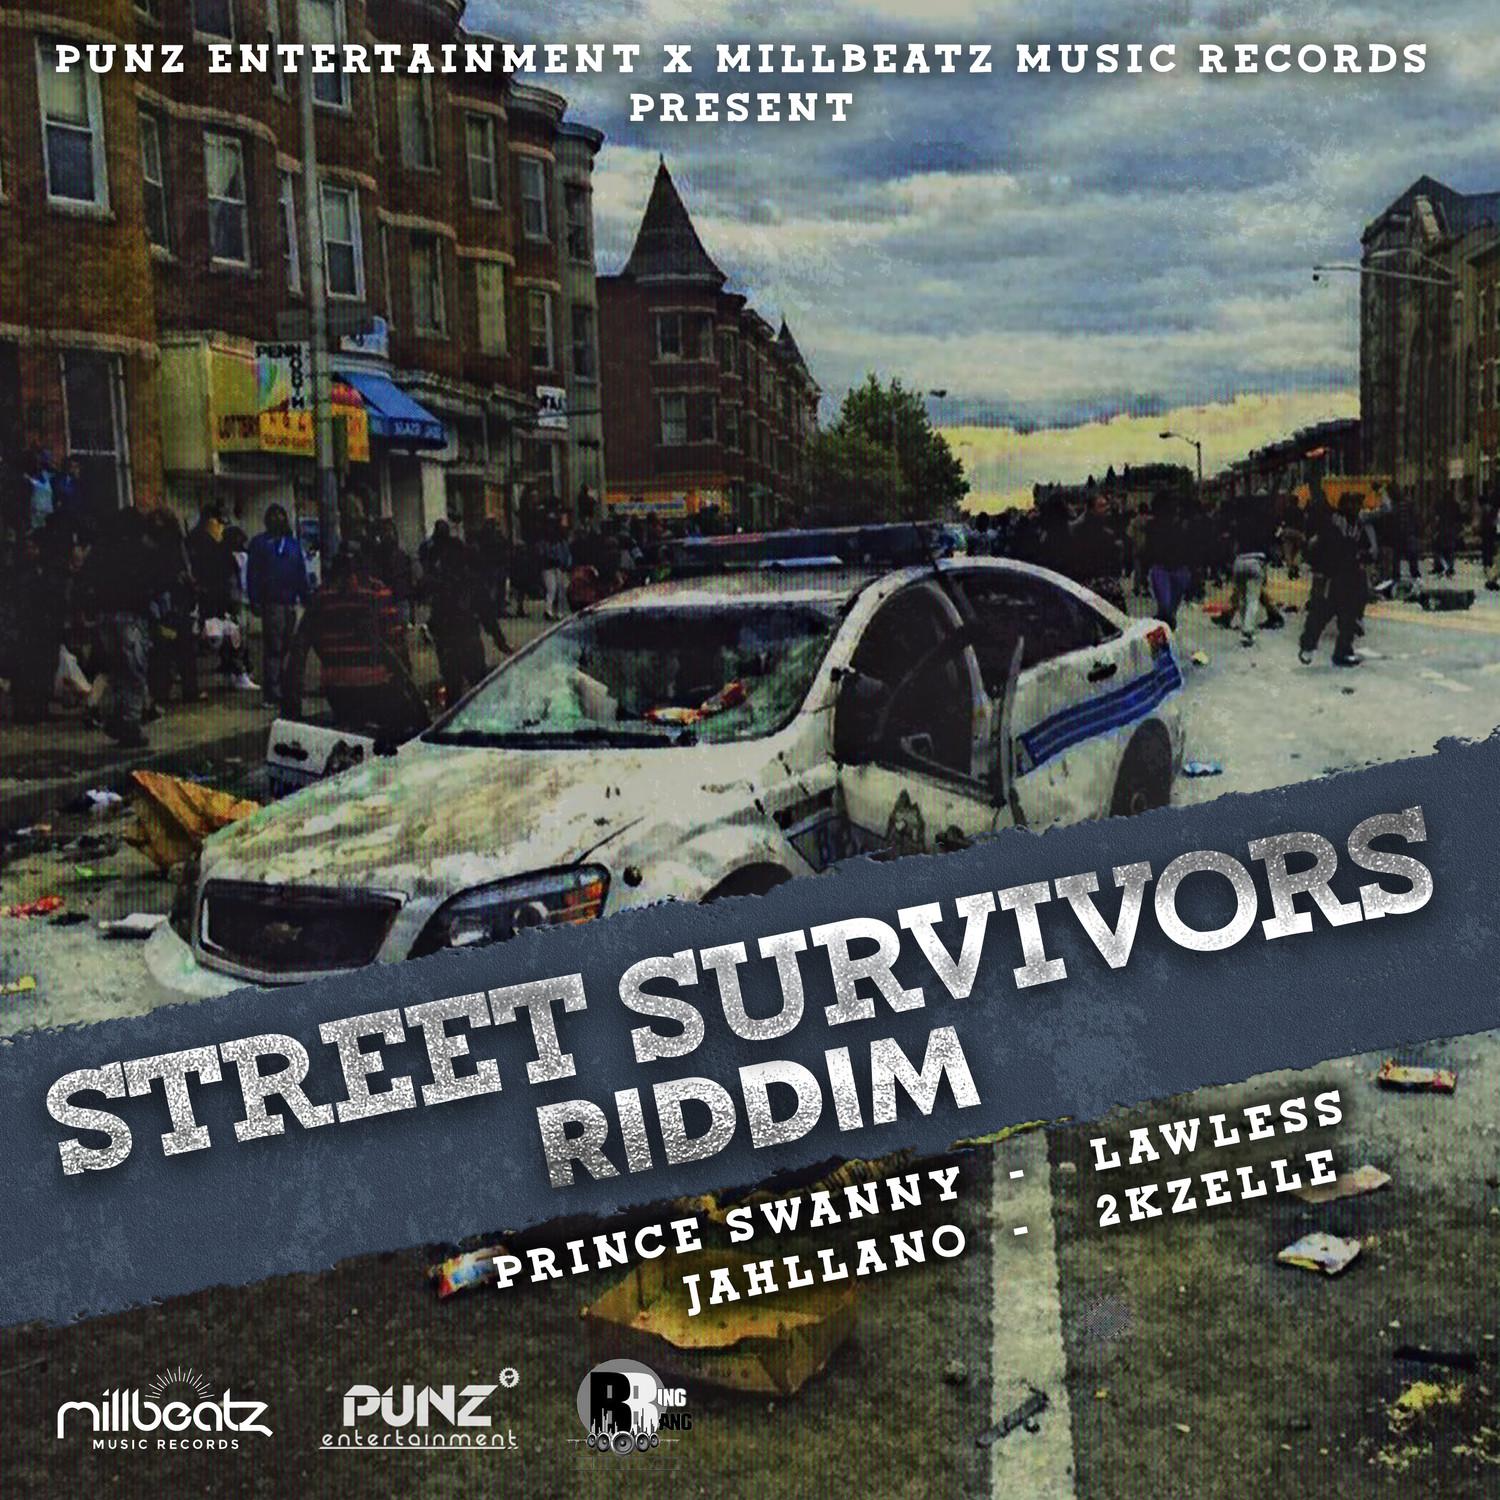 Street Survivors Riddim